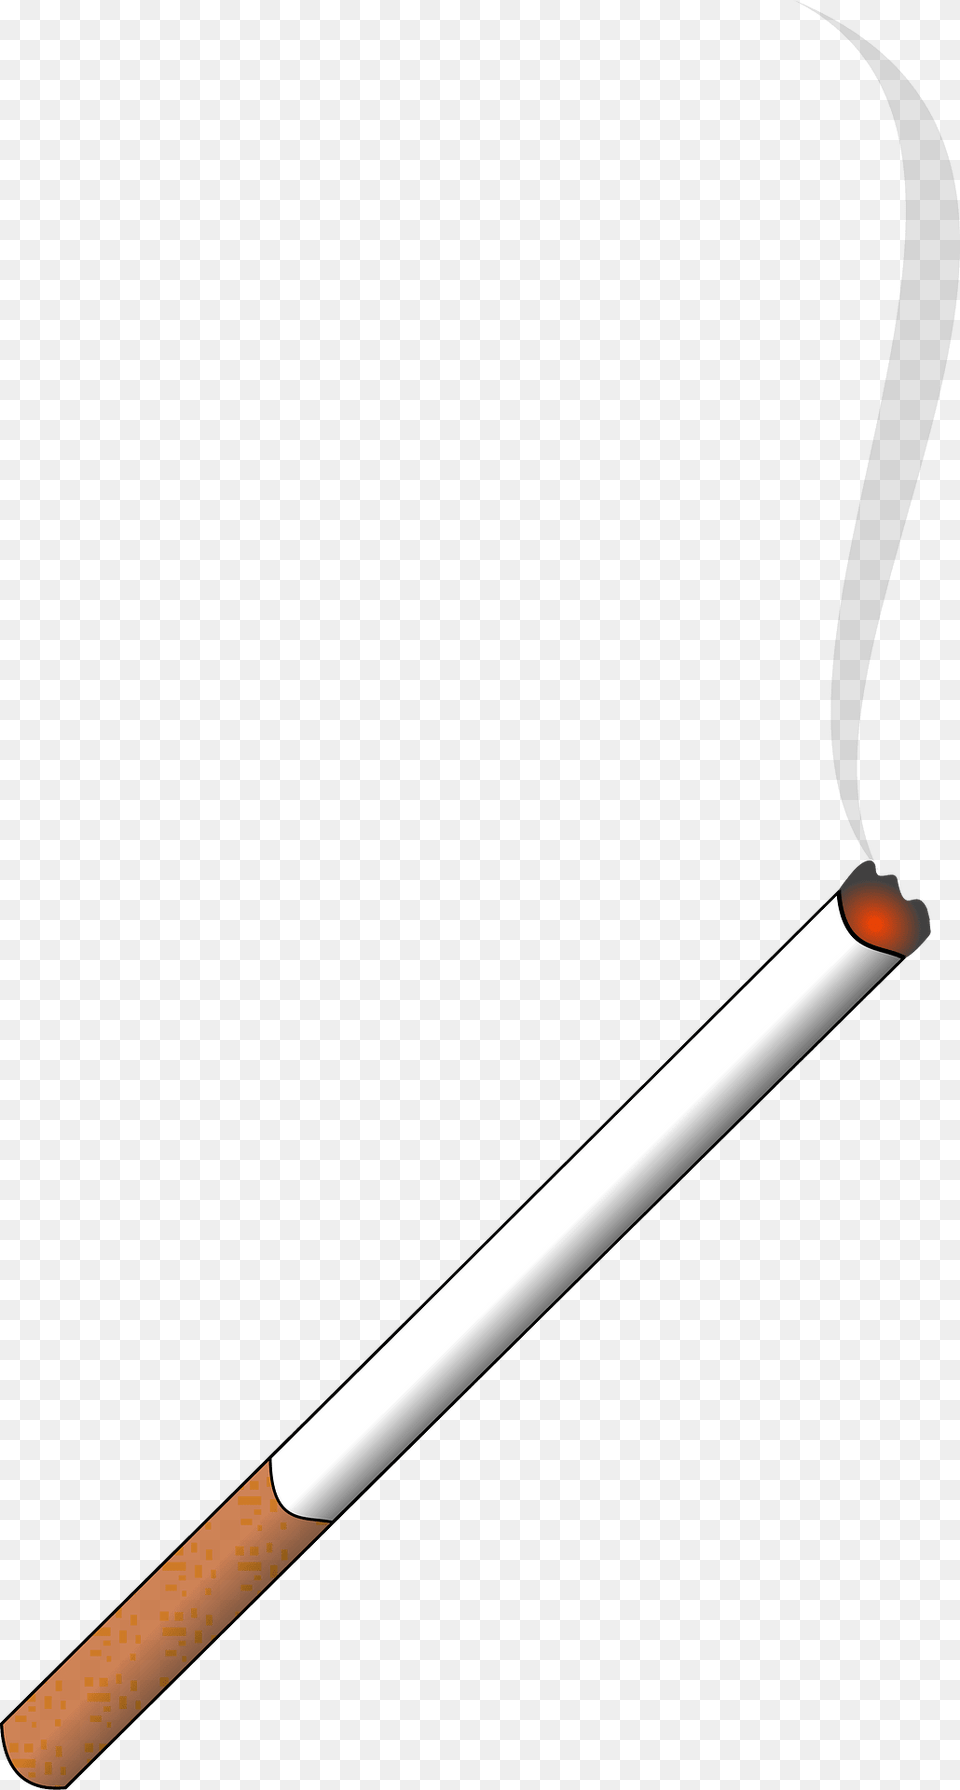 Cigarette Clipart, Stick, Smoke Pipe Png Image